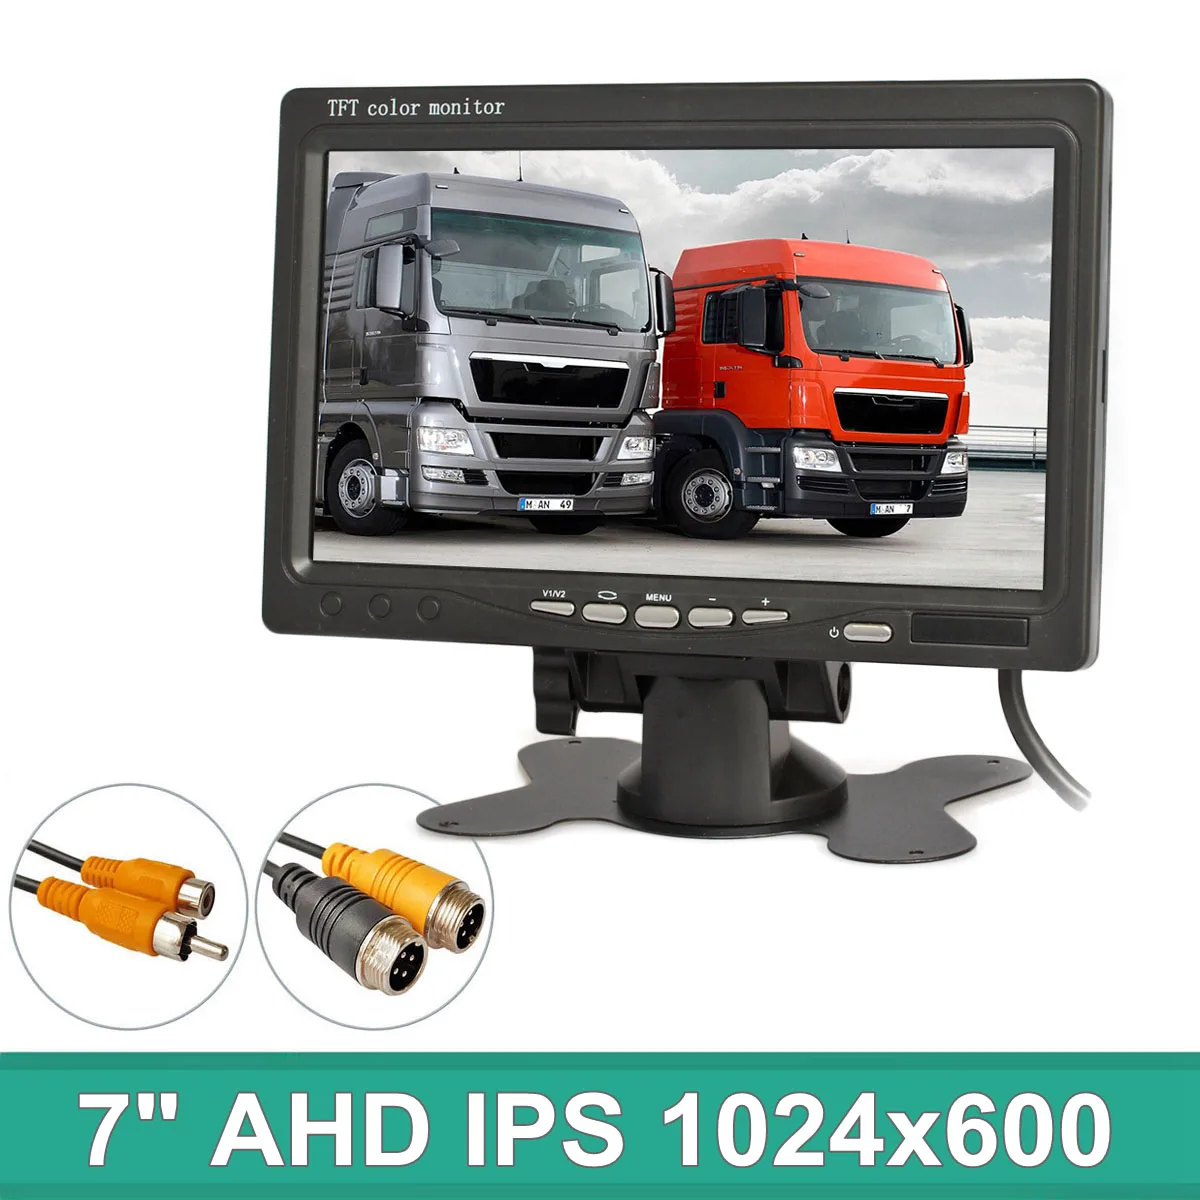 

DIYKIT 1024x600 AHD IPS 7inch LCD Car Monitor Rear View Monitor Support 1080P AHD Camera 2 x 4PIN Video Input